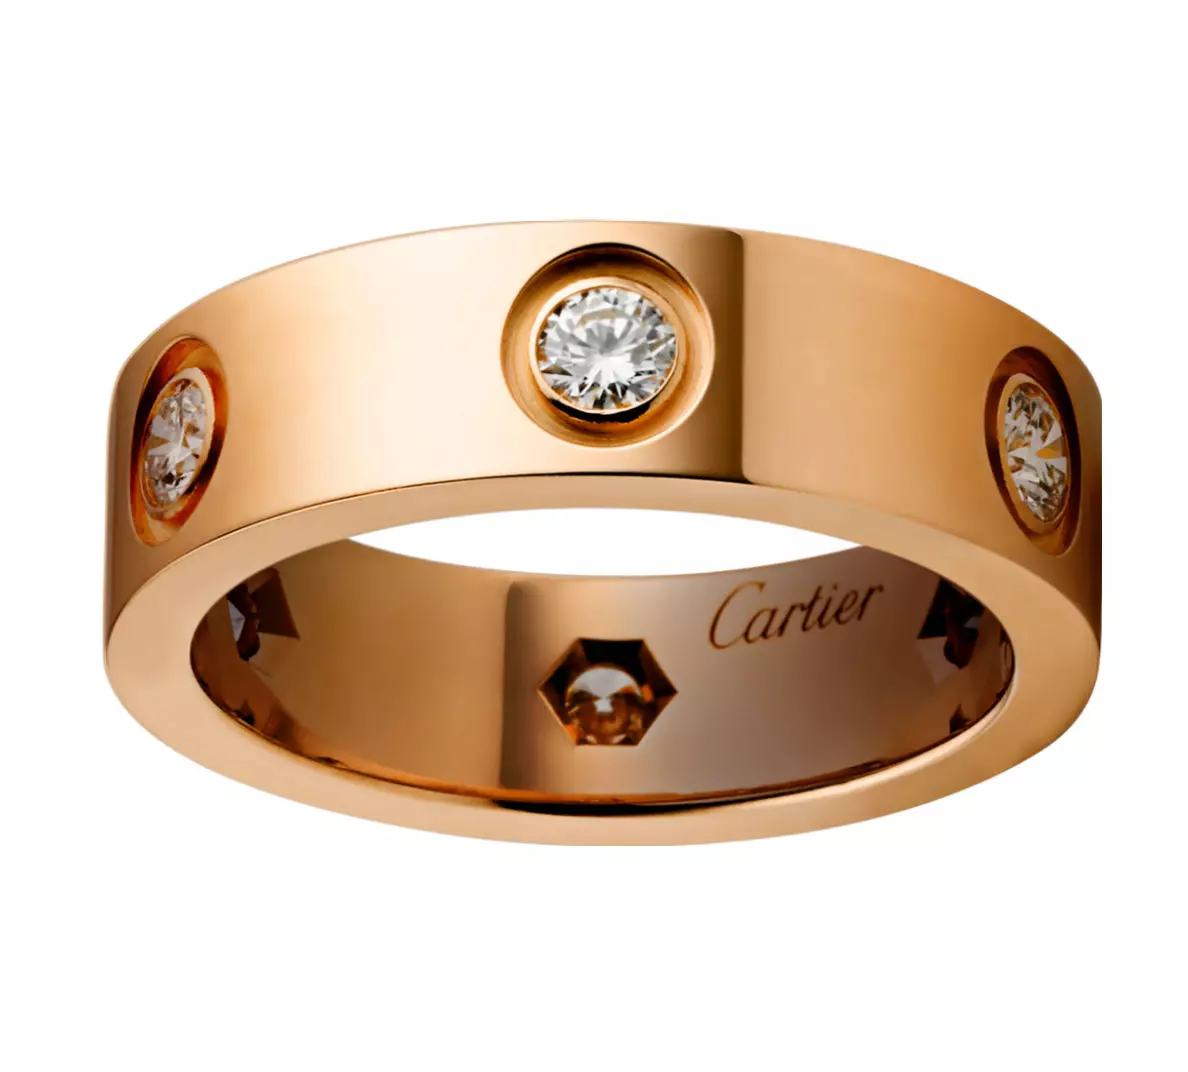 Ring Cartier (115 foto's): Jewelry Geskiedenis en Hersiening van Popular Trinity Models, spyker, Love, Koste 3102_71